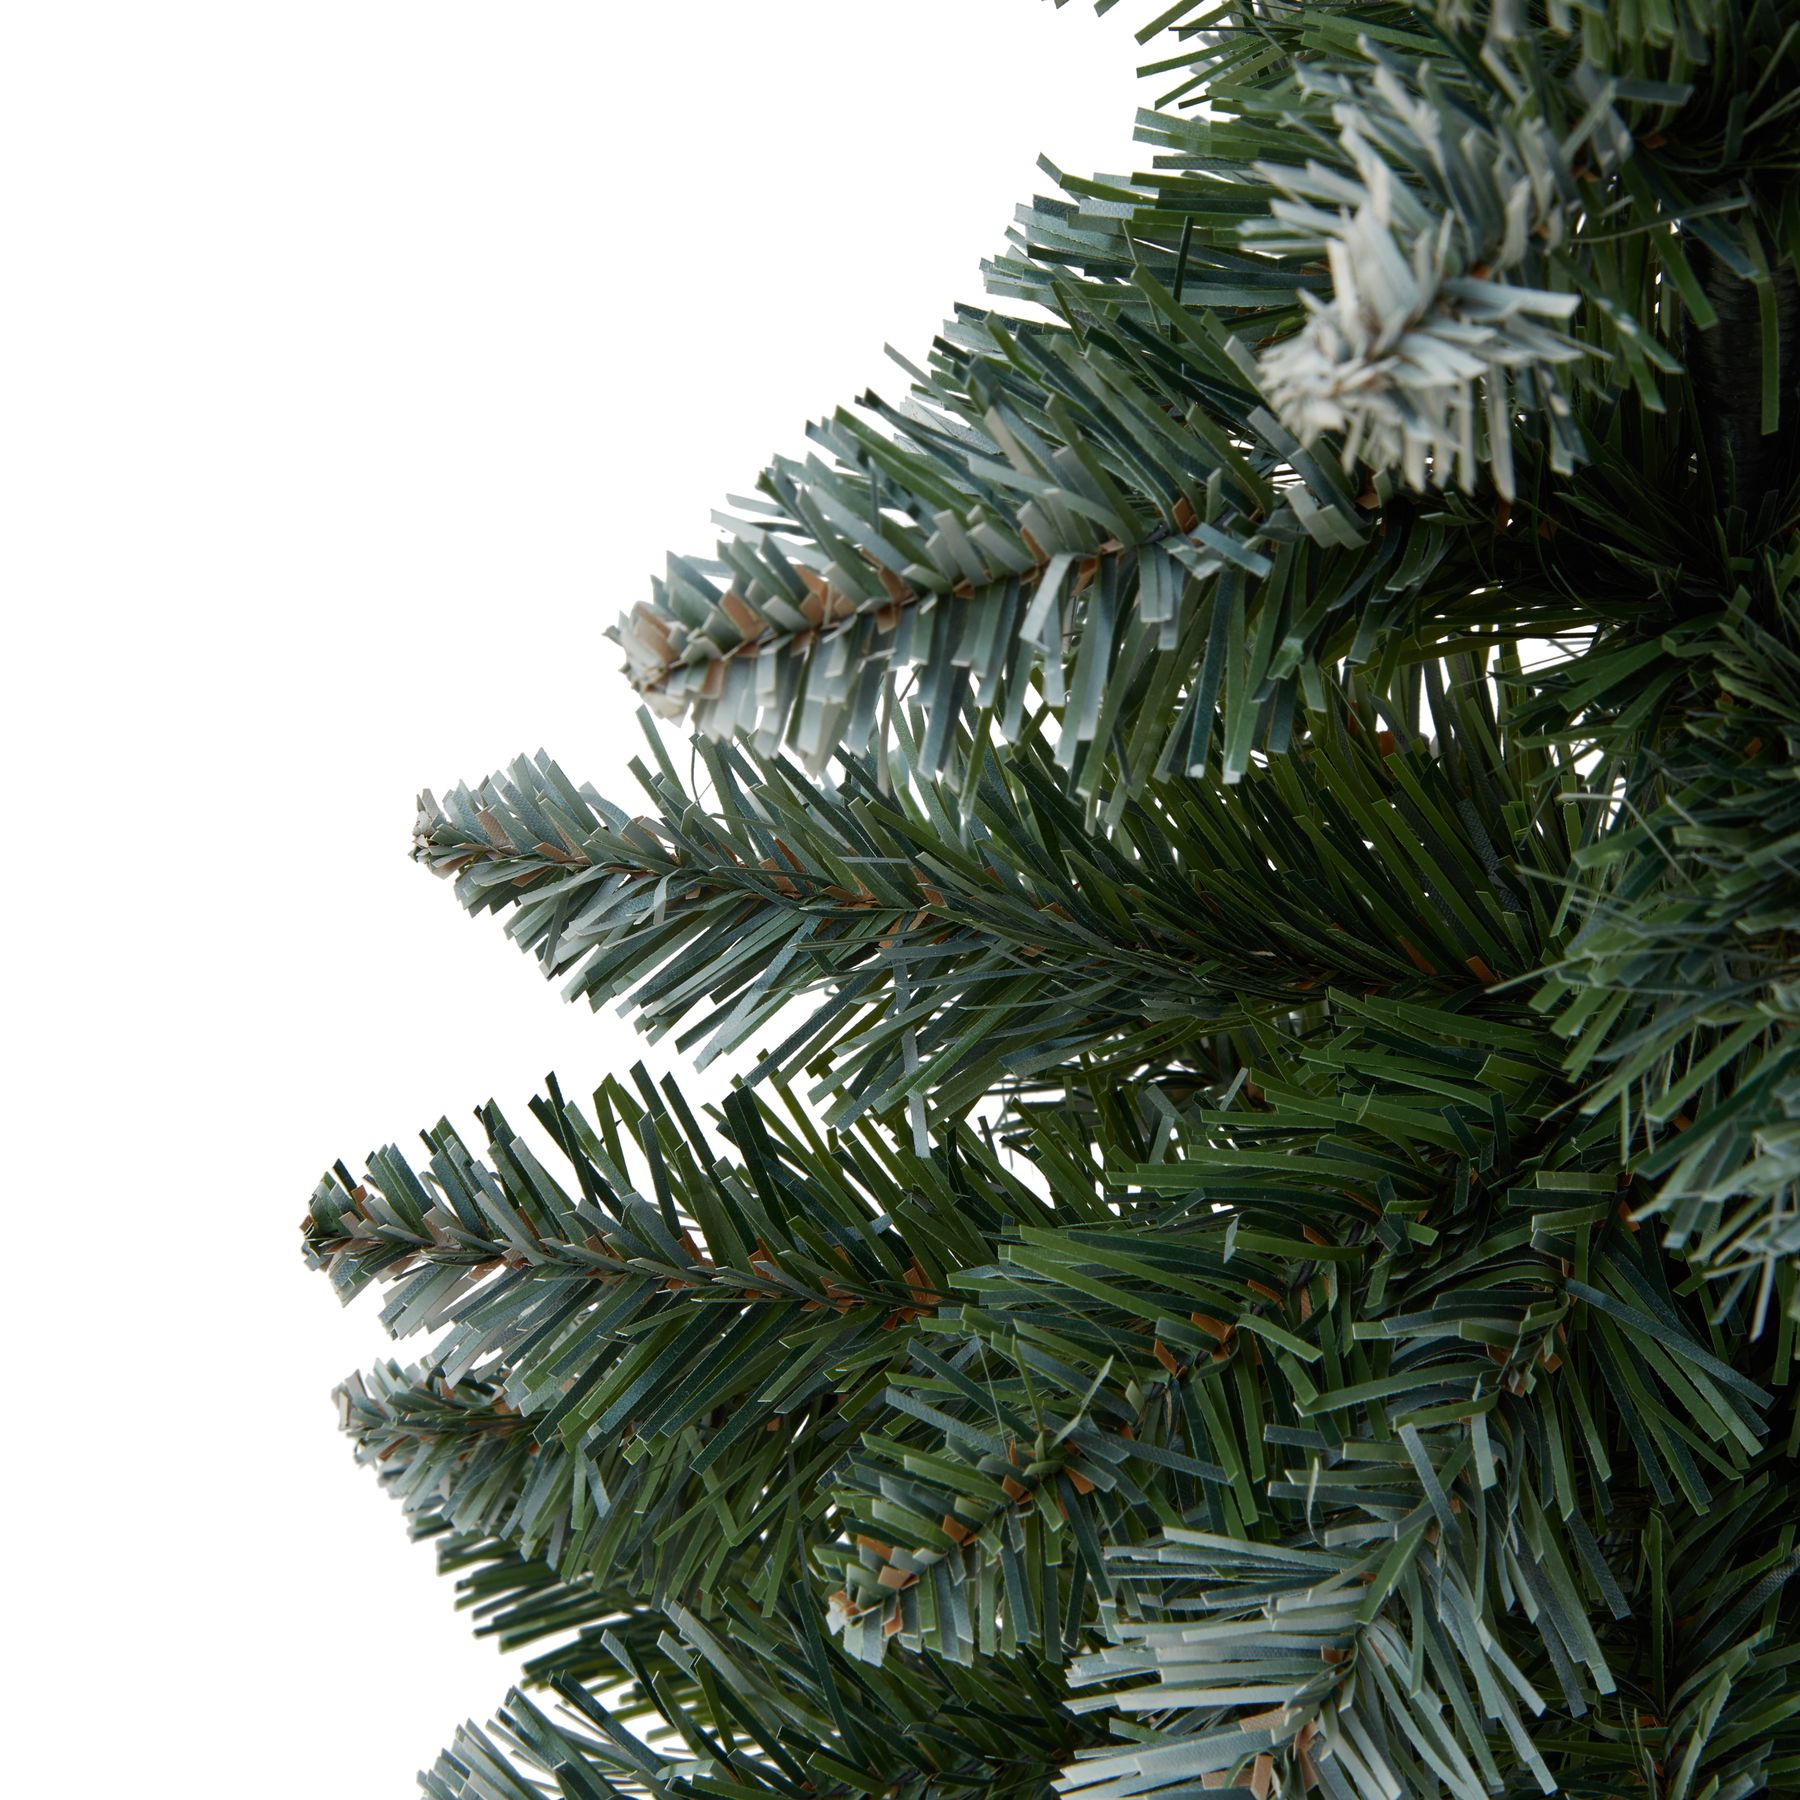 Medium Snowy Conifer Tree In Hessian Wrap - Image 2